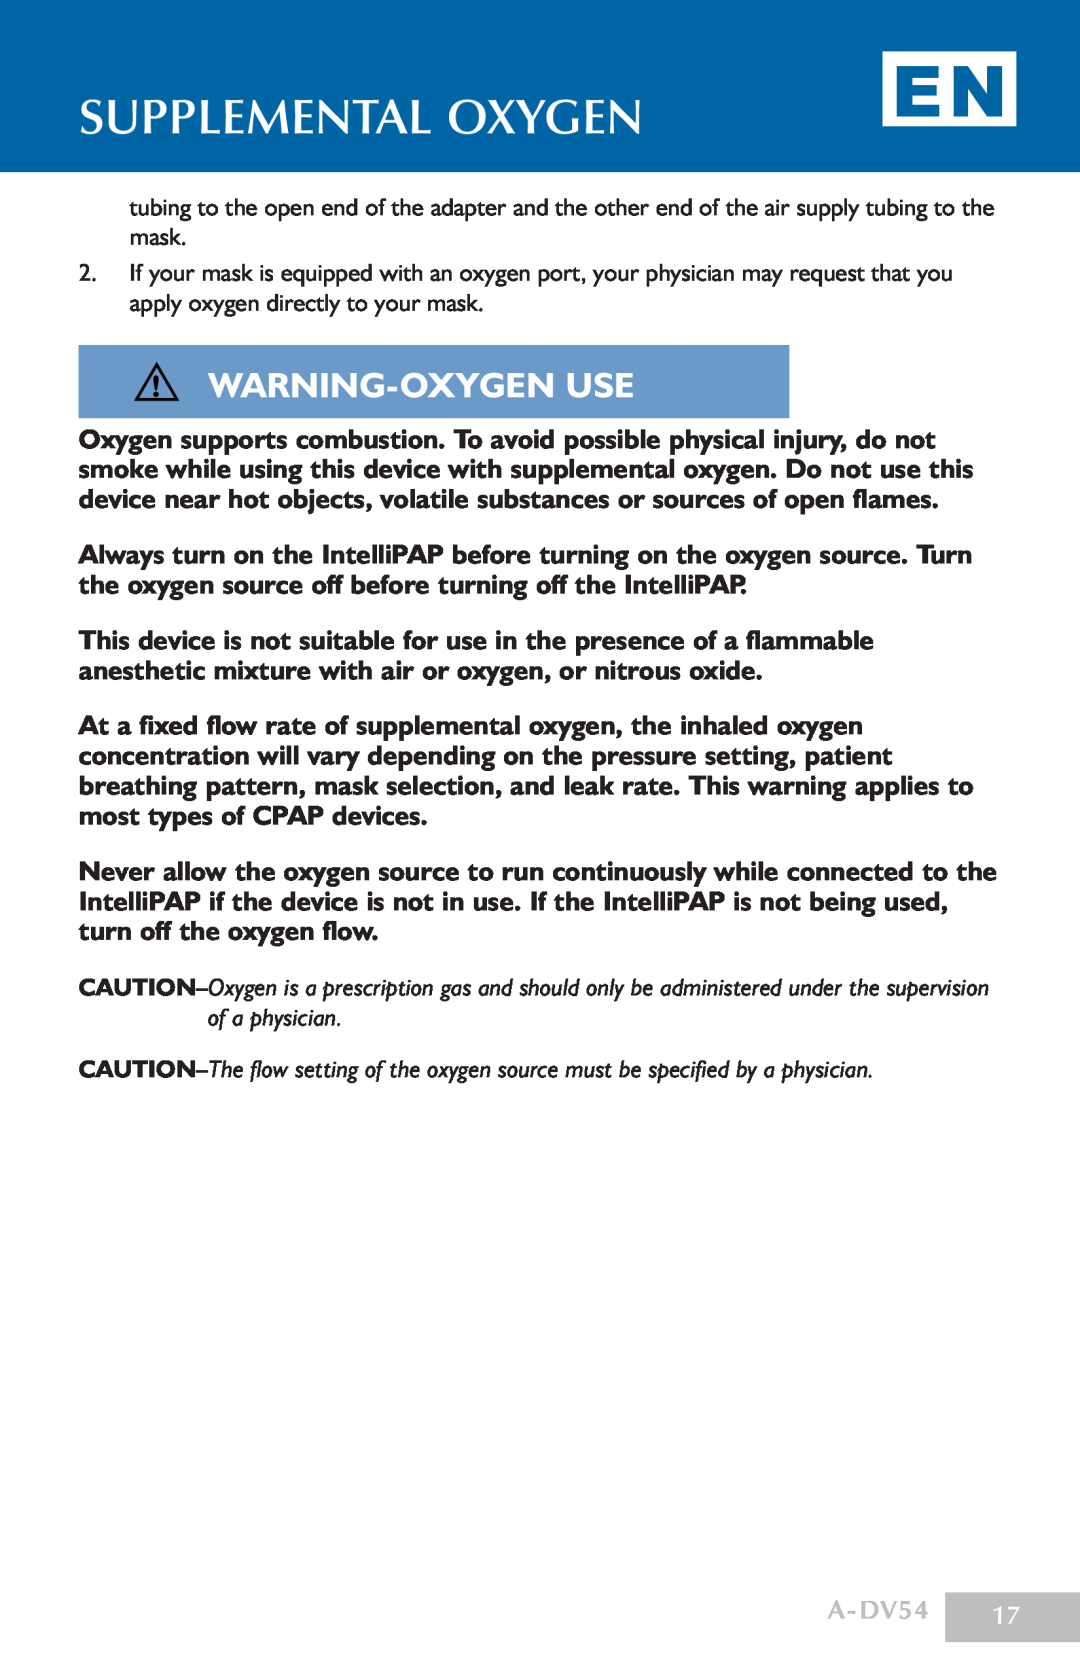 DeVillbiss Air Power Company manual supplemental oxygen, WARNING-Oxygen use, A-DV54 